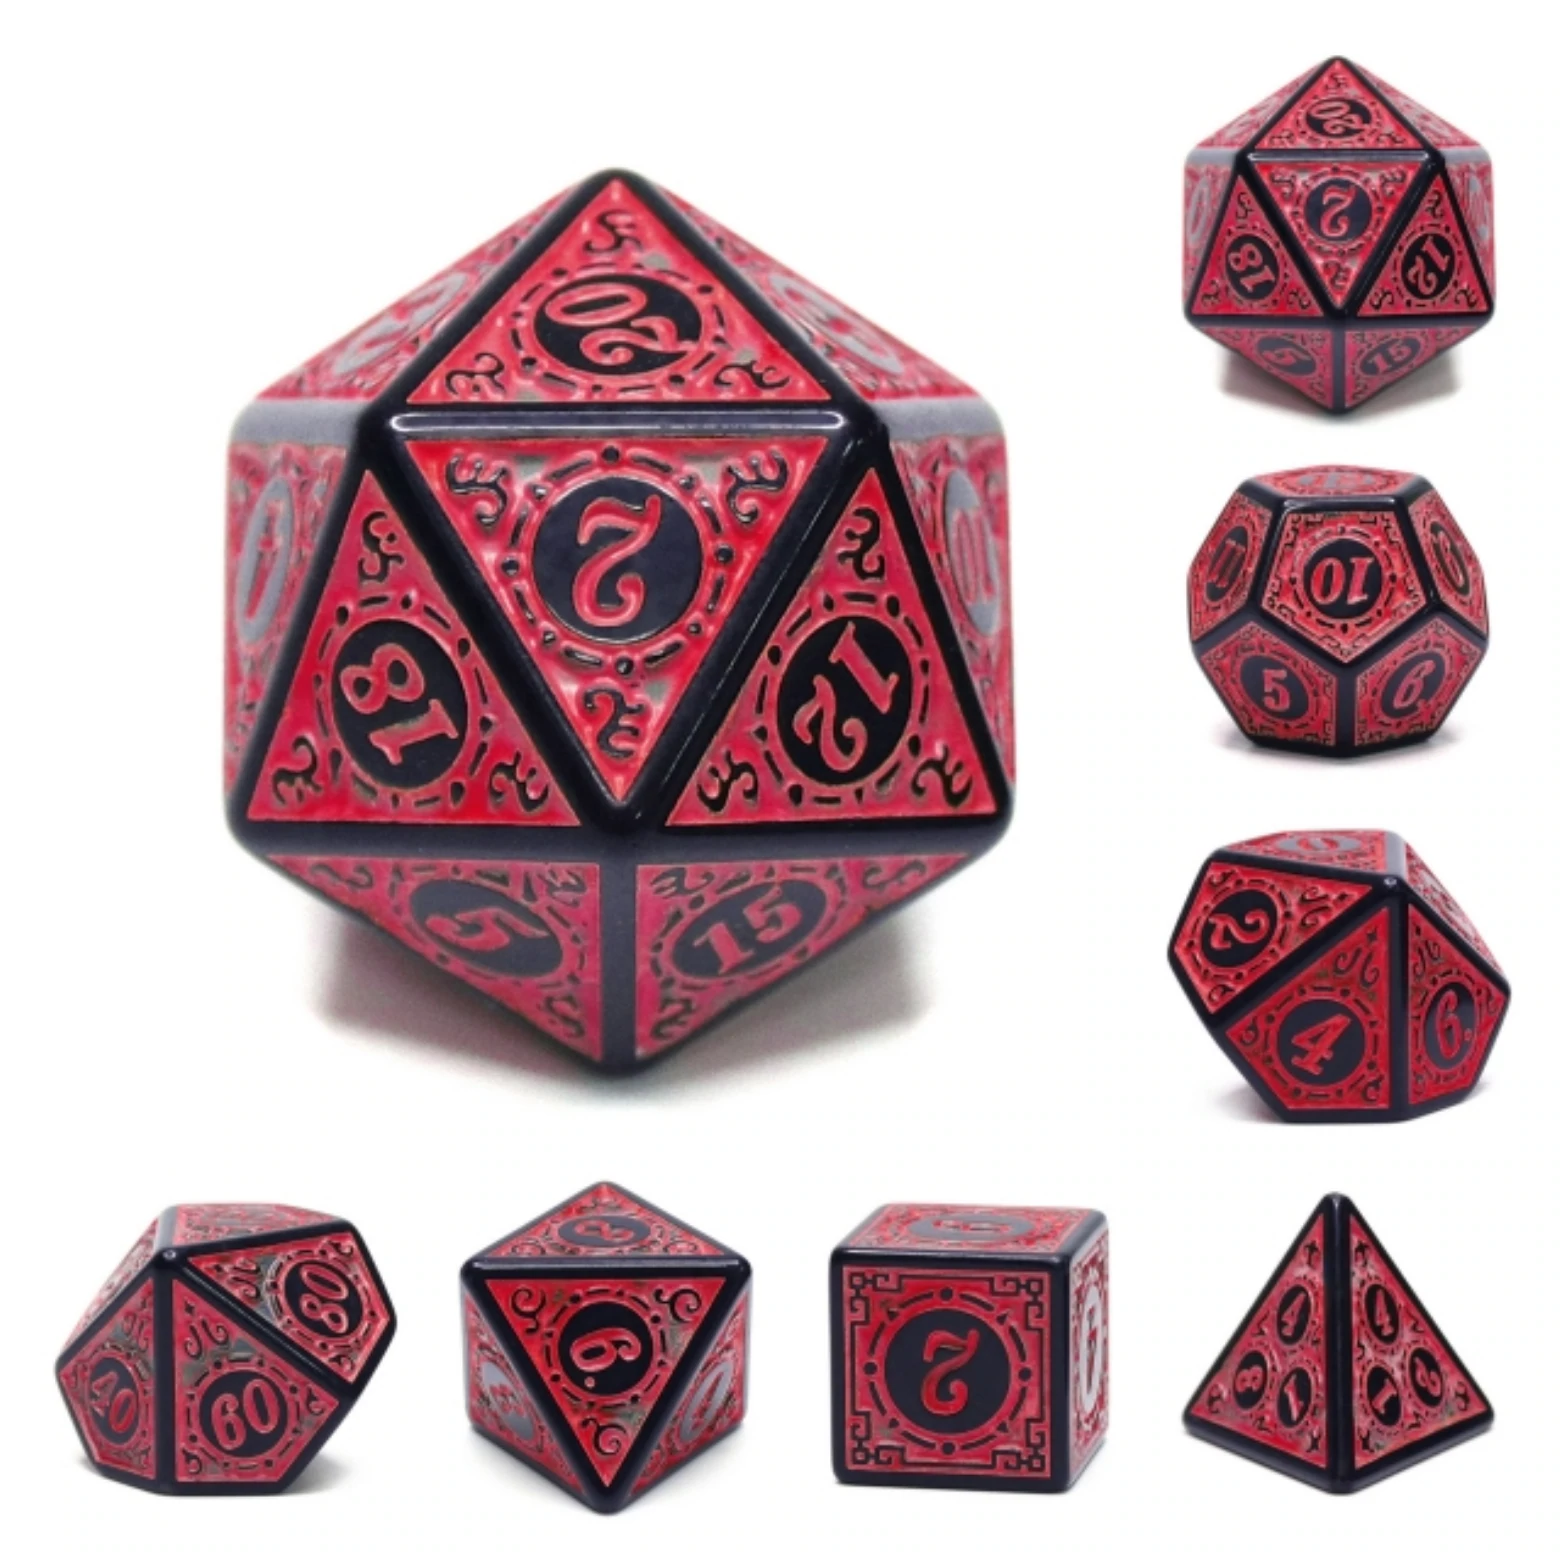 6 RPG w6 cubo set Magic Flame rojo dnd DSA Warhammer dice 4 Friends tabletop 